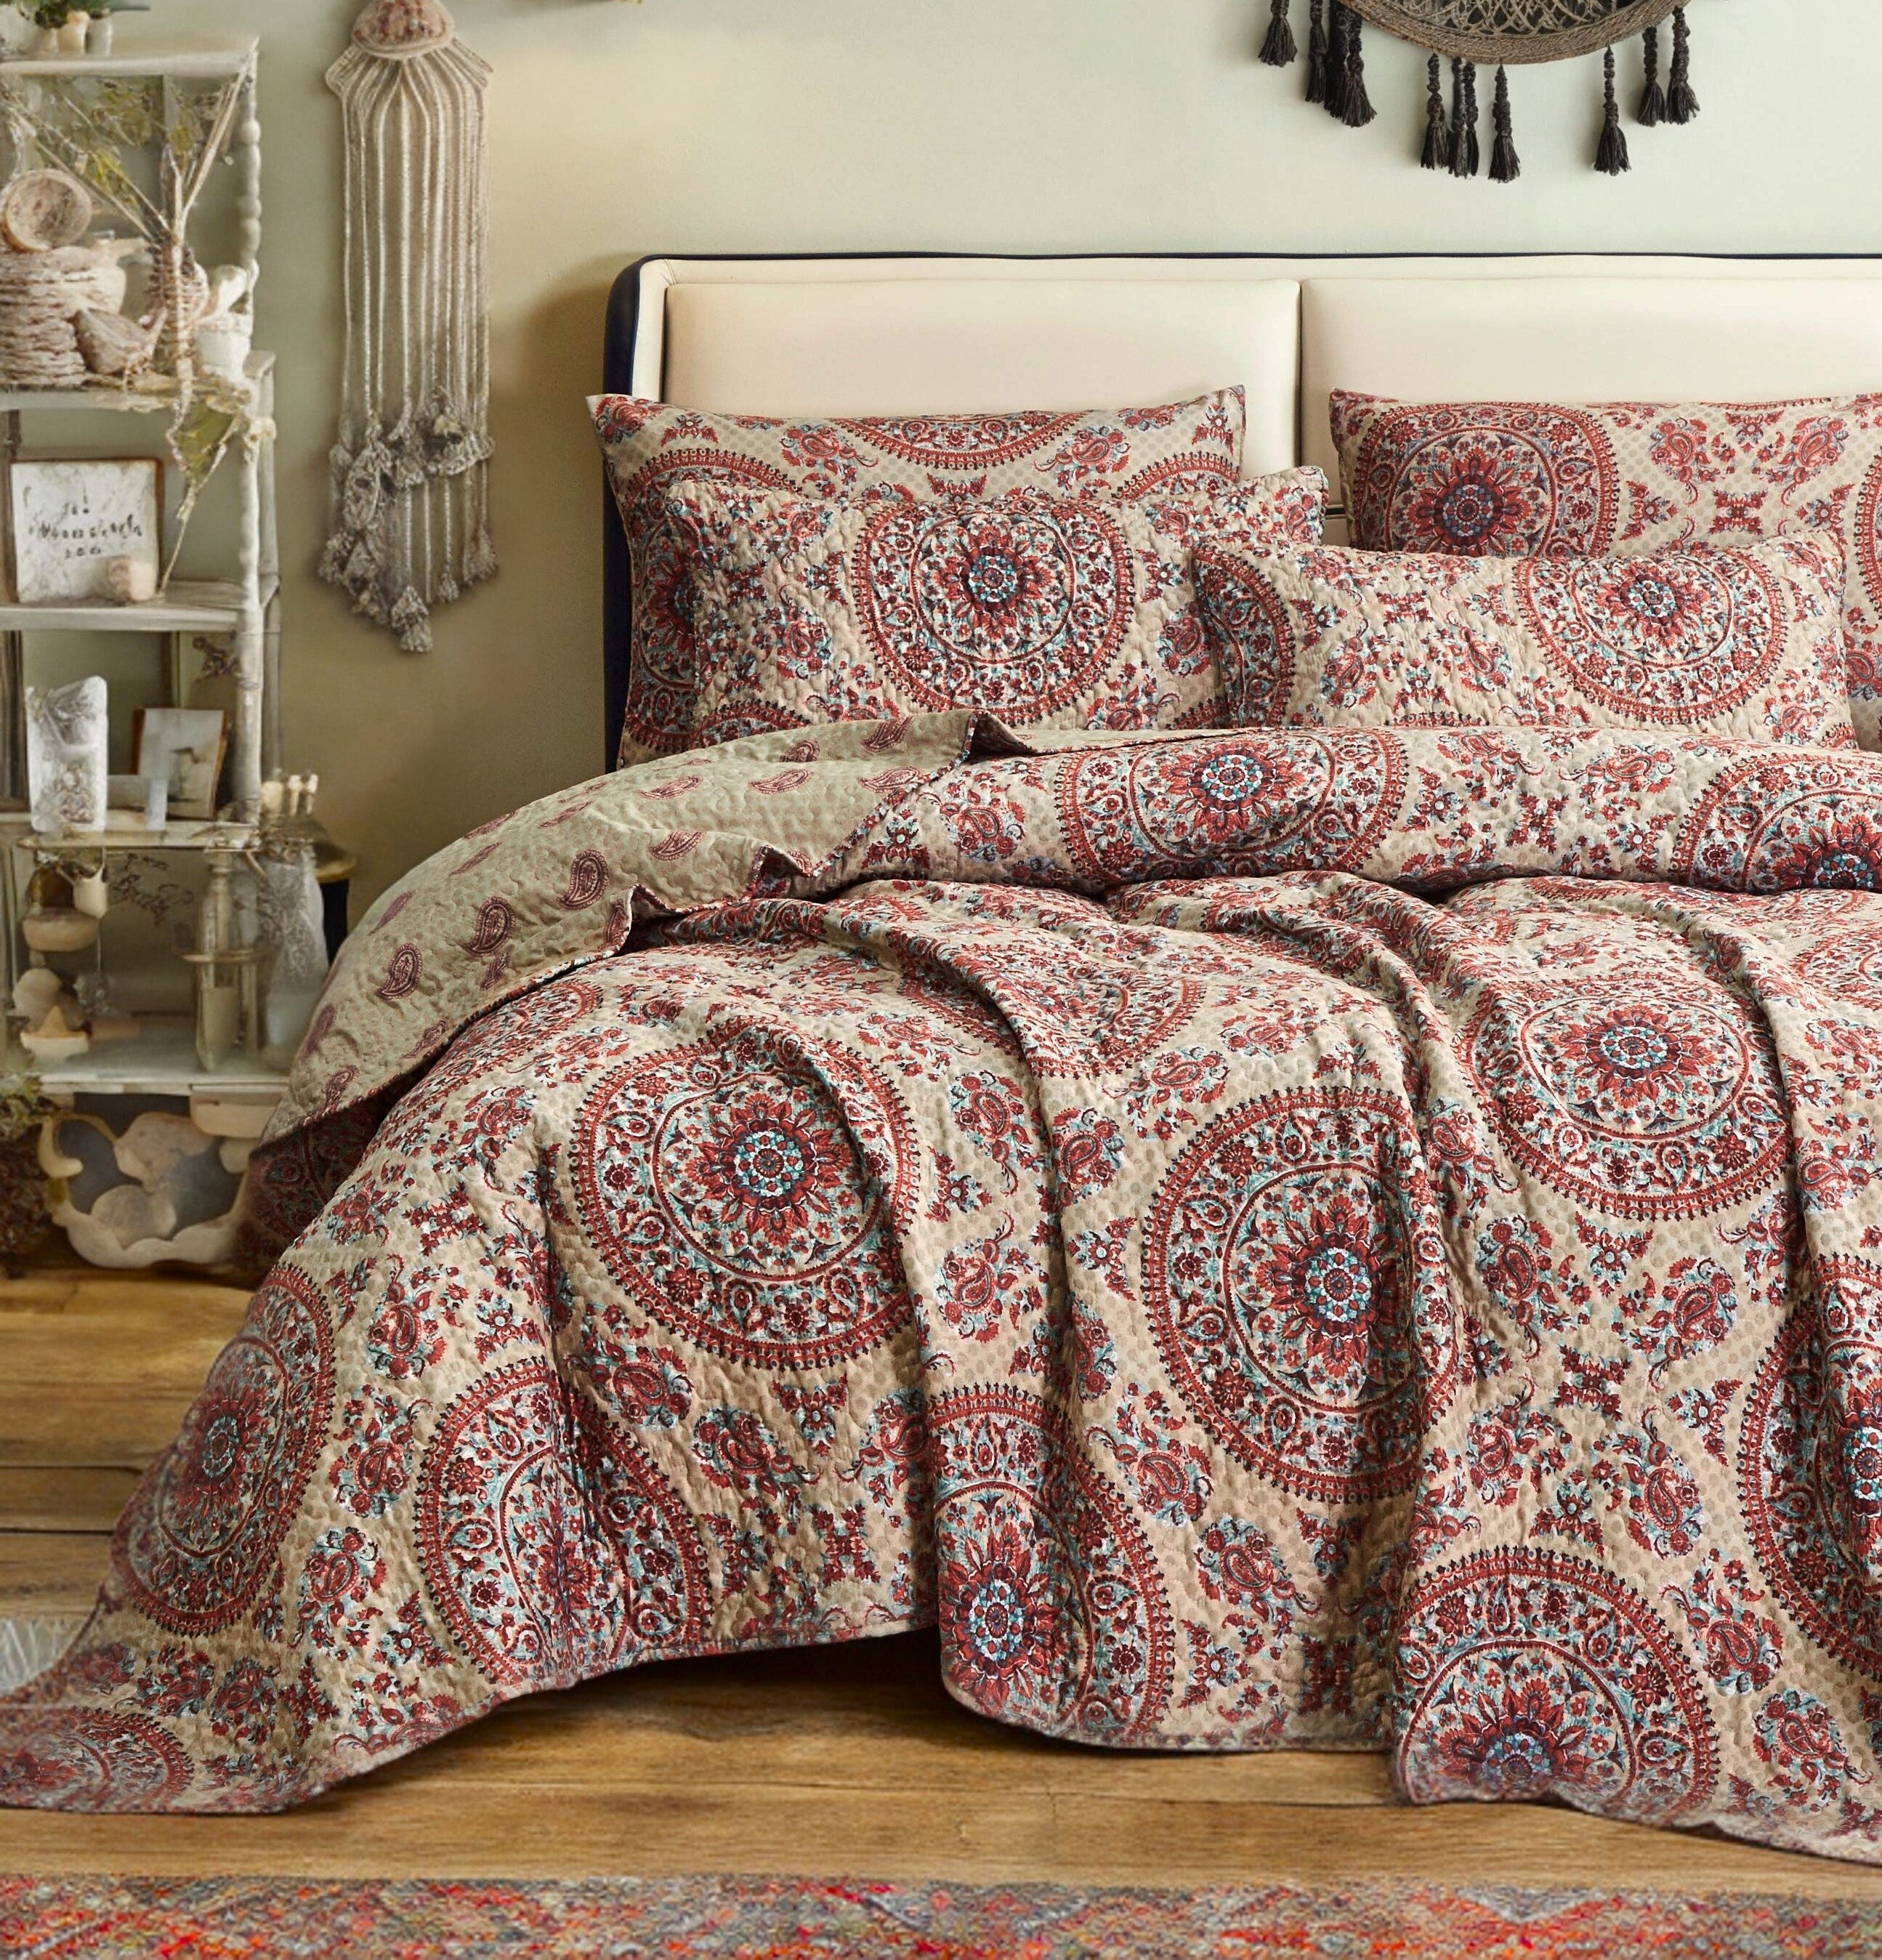 Tache Boteh Quilt Set A cozy bed with a bohemian medallion print quilt